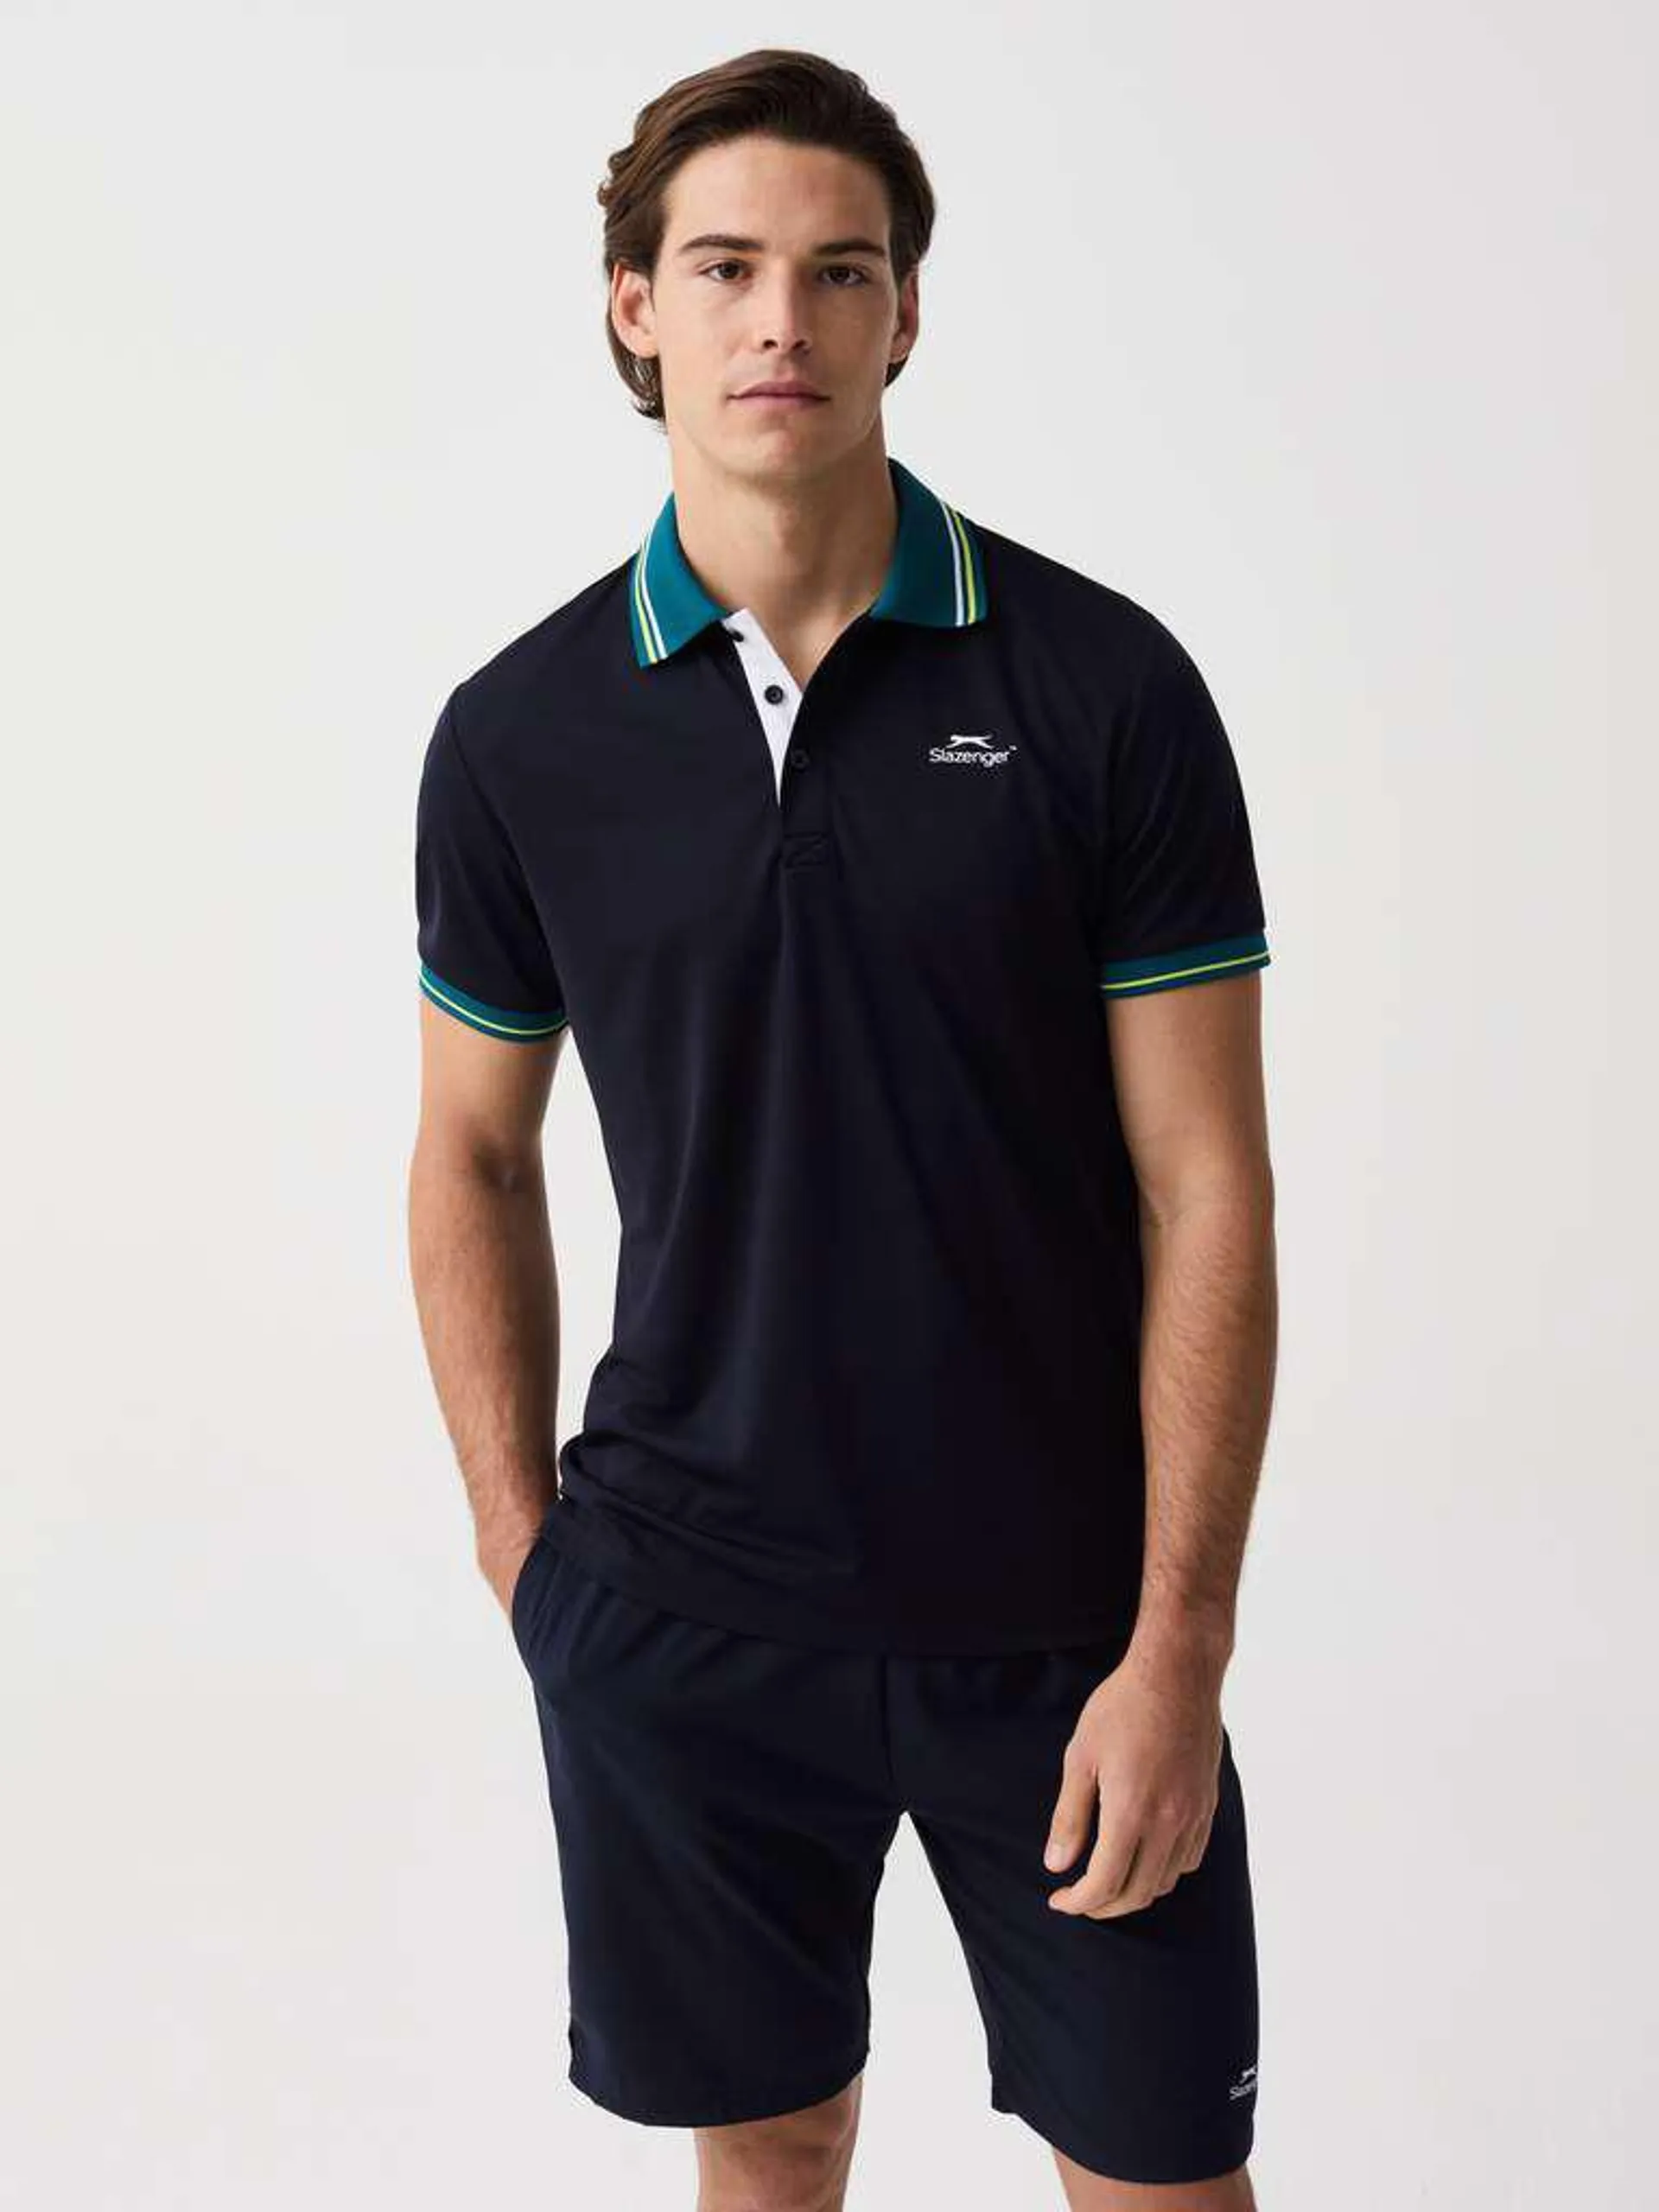 Dark Blue Slazenger tennis polo shirt with striped trims